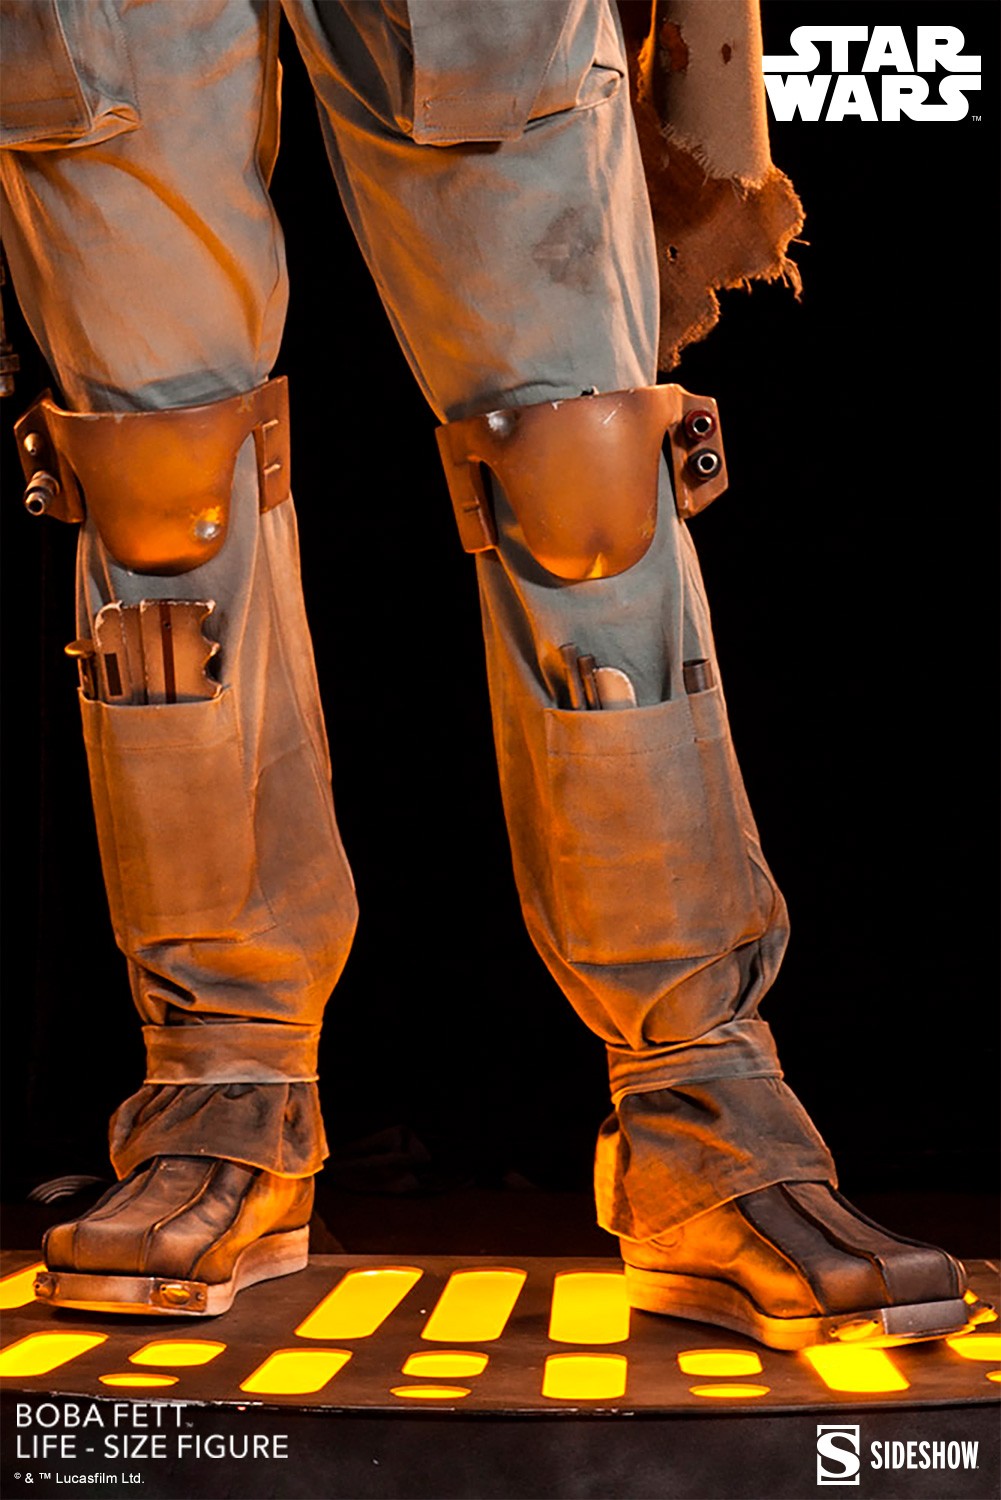 Sideshow Star Wars Life-Size Statue Boba Fett